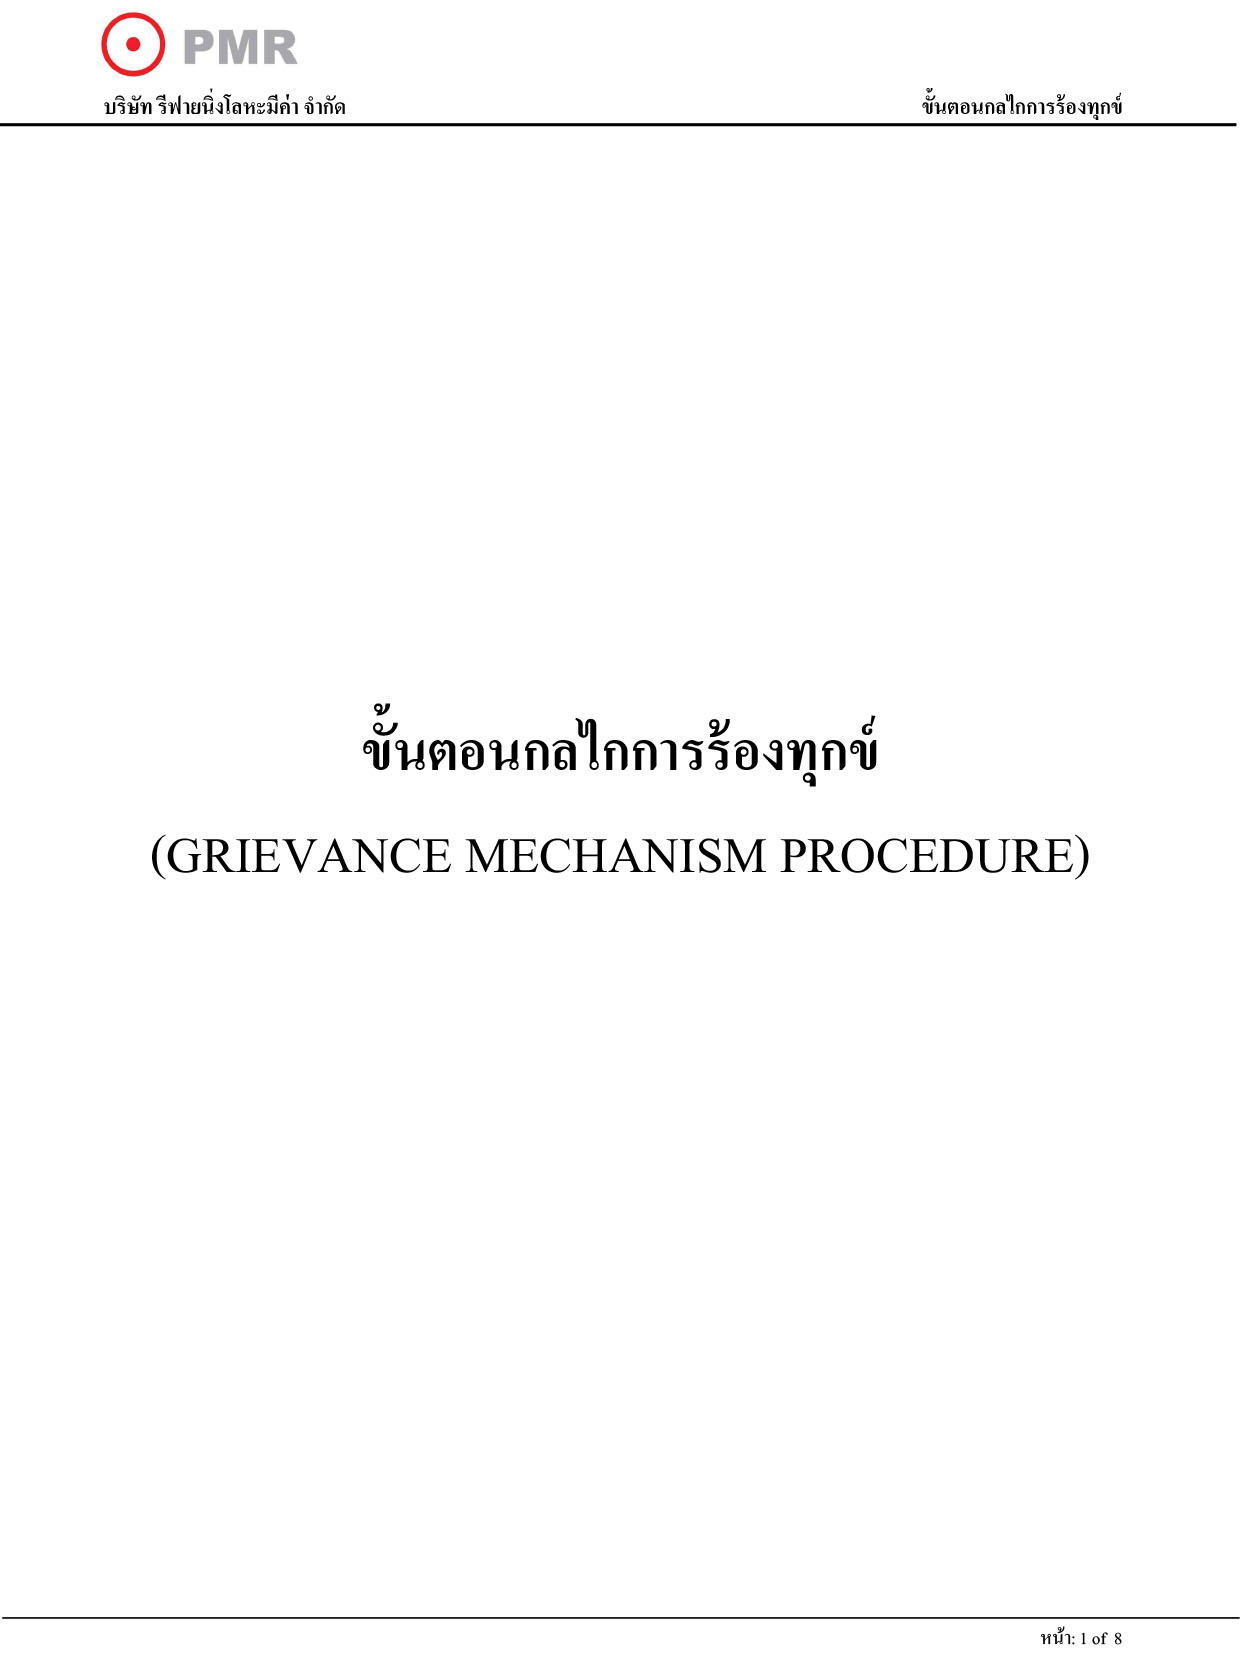 Grievance Mechanism Procedure Page 1